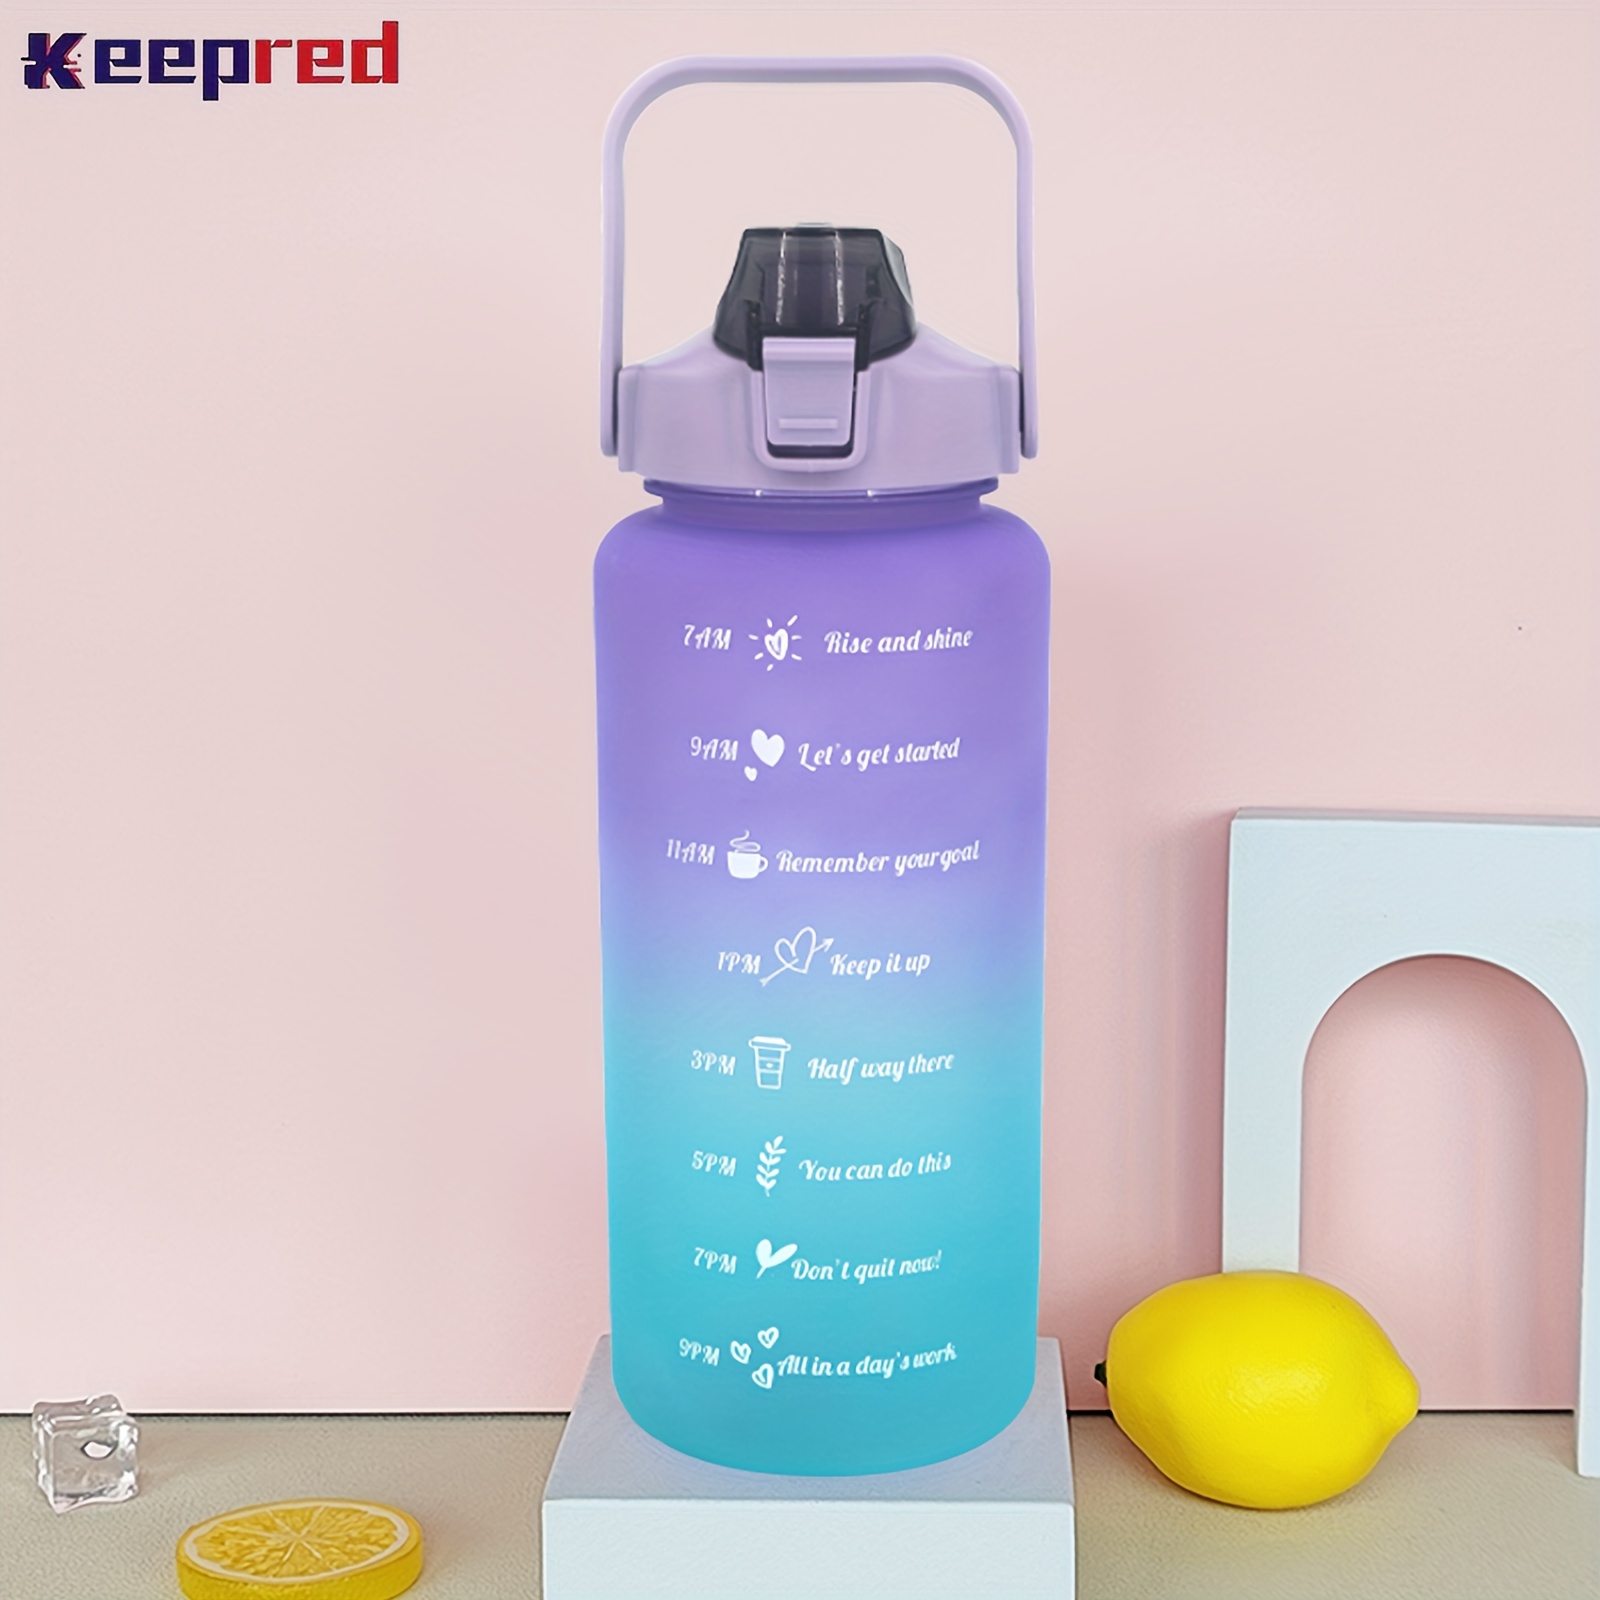 BTS i Purple U Reusable Water Bottle 